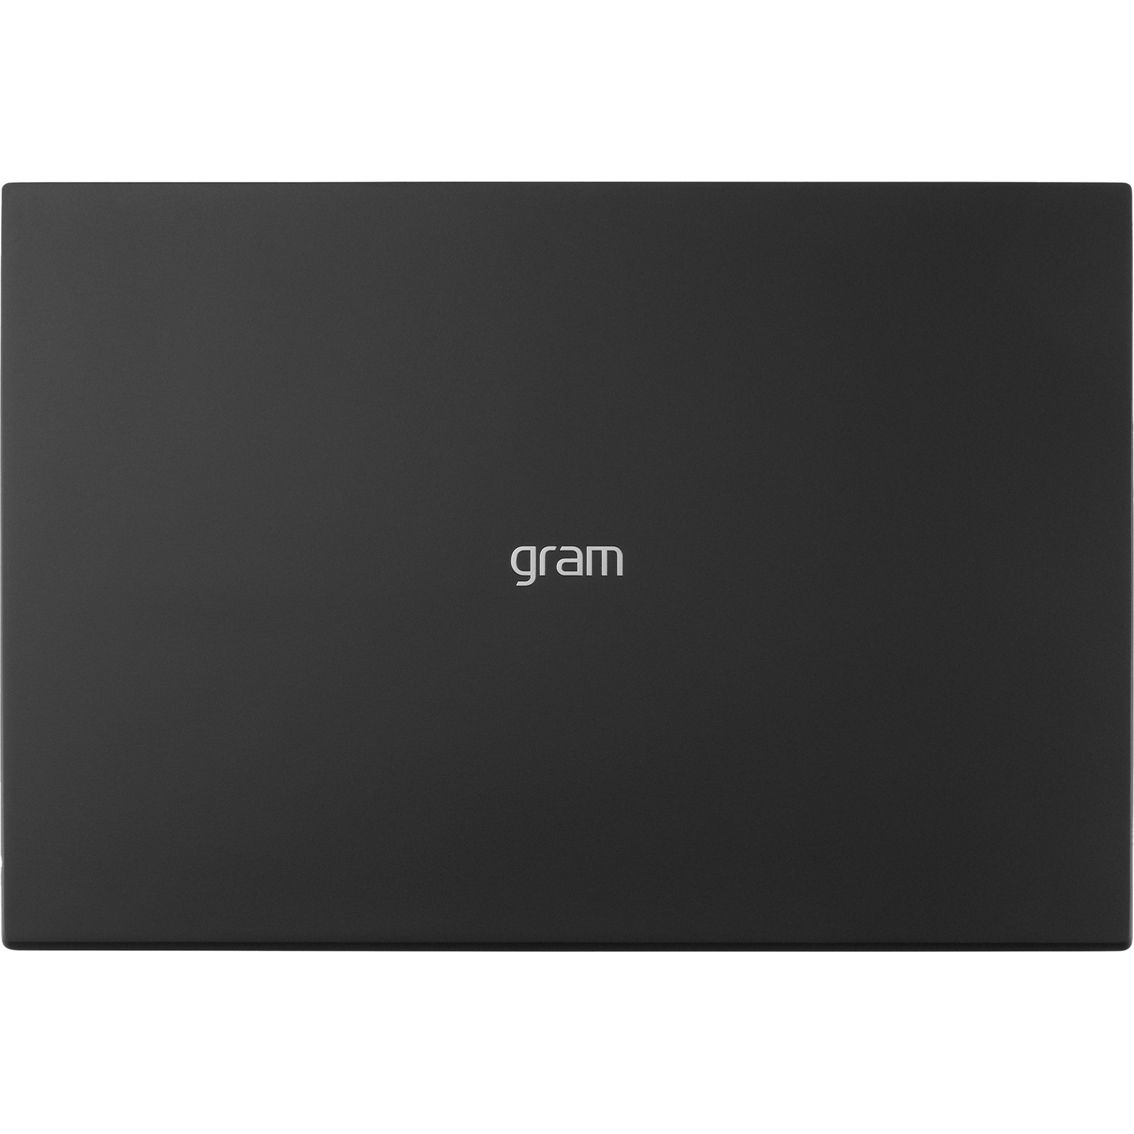 LG gram 17 in. Intel Evo Core i7 2.2GHz 16GB RAM 1TB SSD Laptop - Image 8 of 9